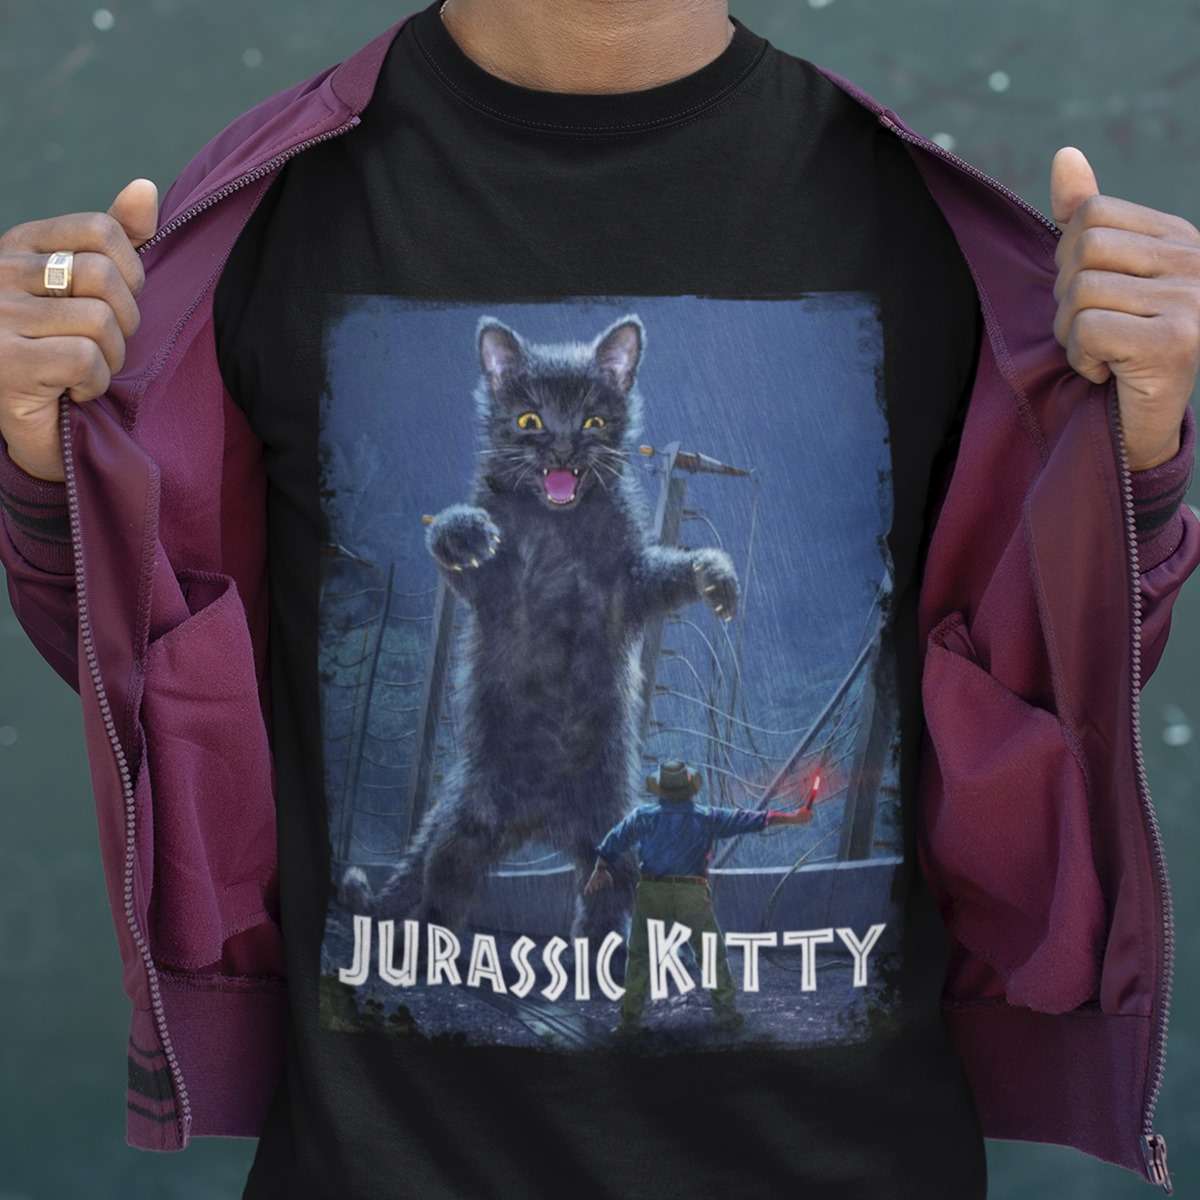 Jurassic Kitty - Jurassic world parody version, giant cat jurassic kitty